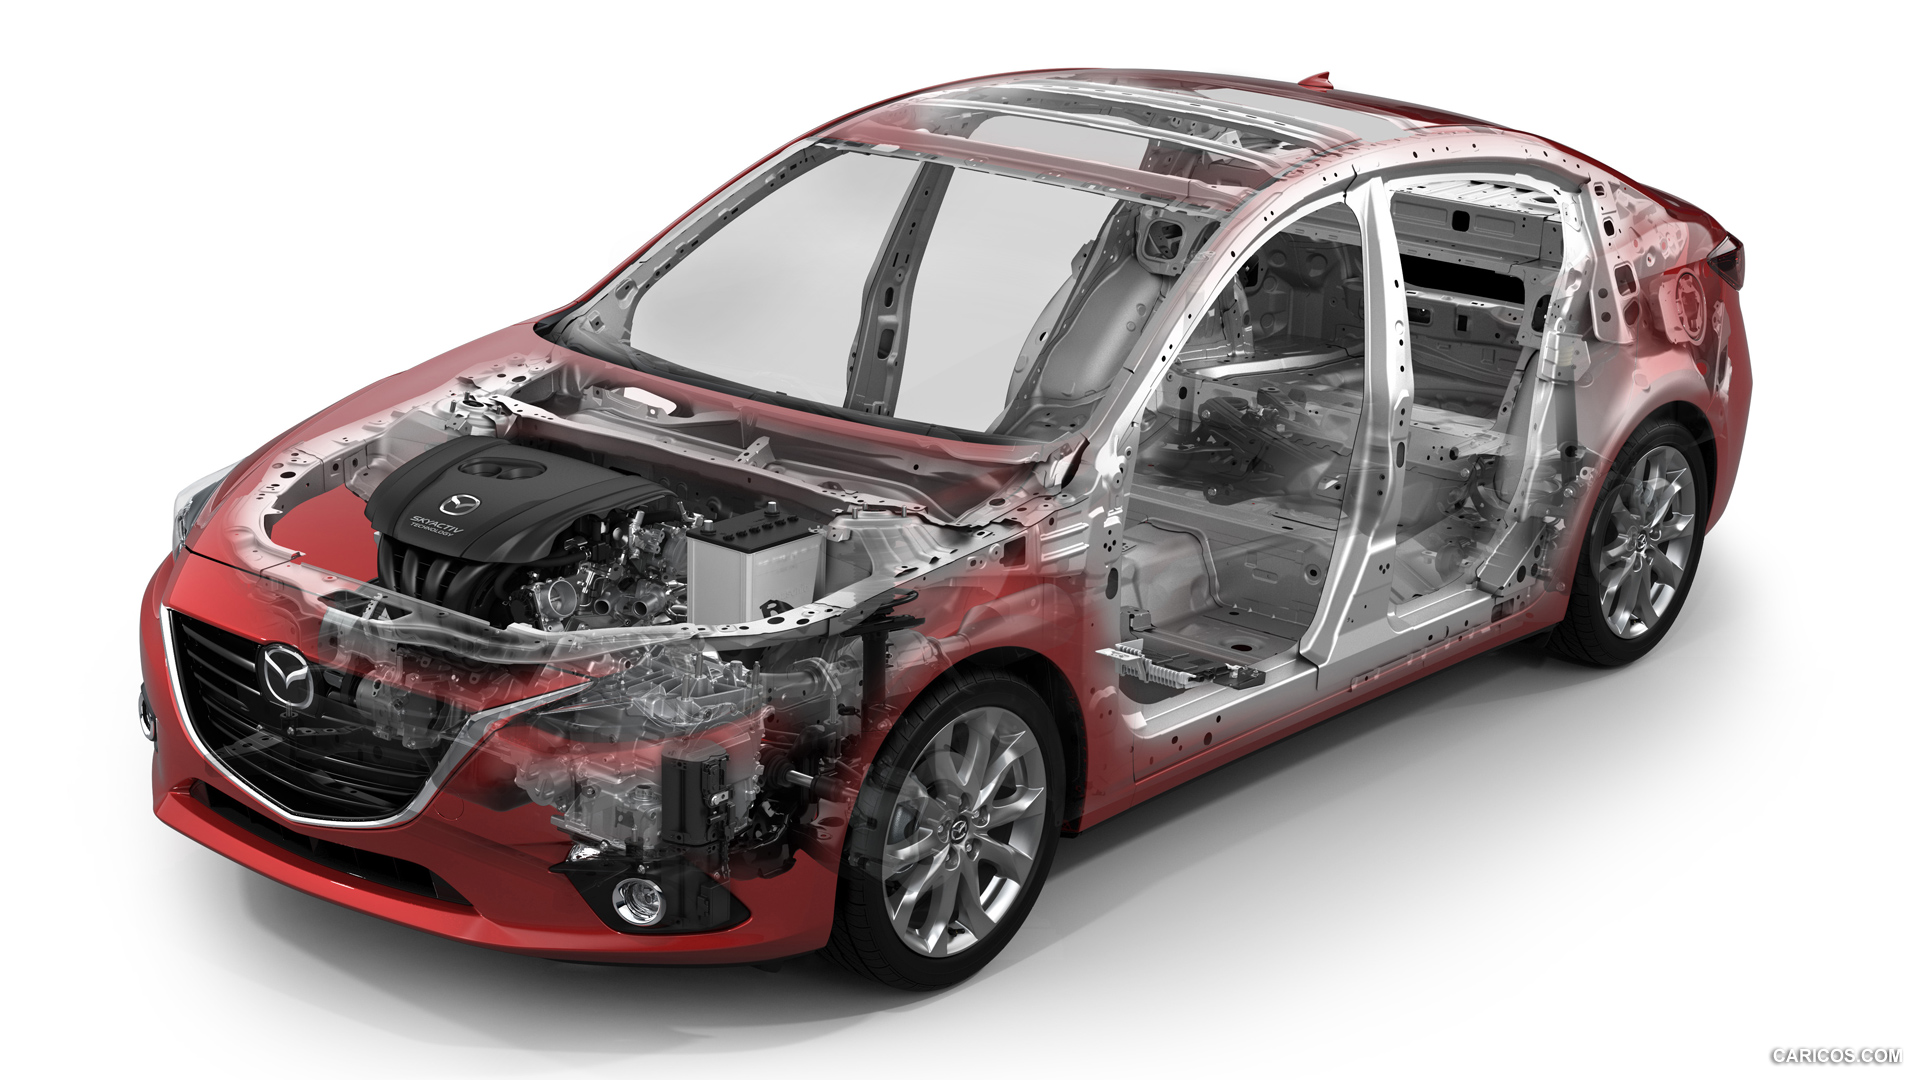 2014 Mazda3 Sedan Ghost View - , #77 of 98